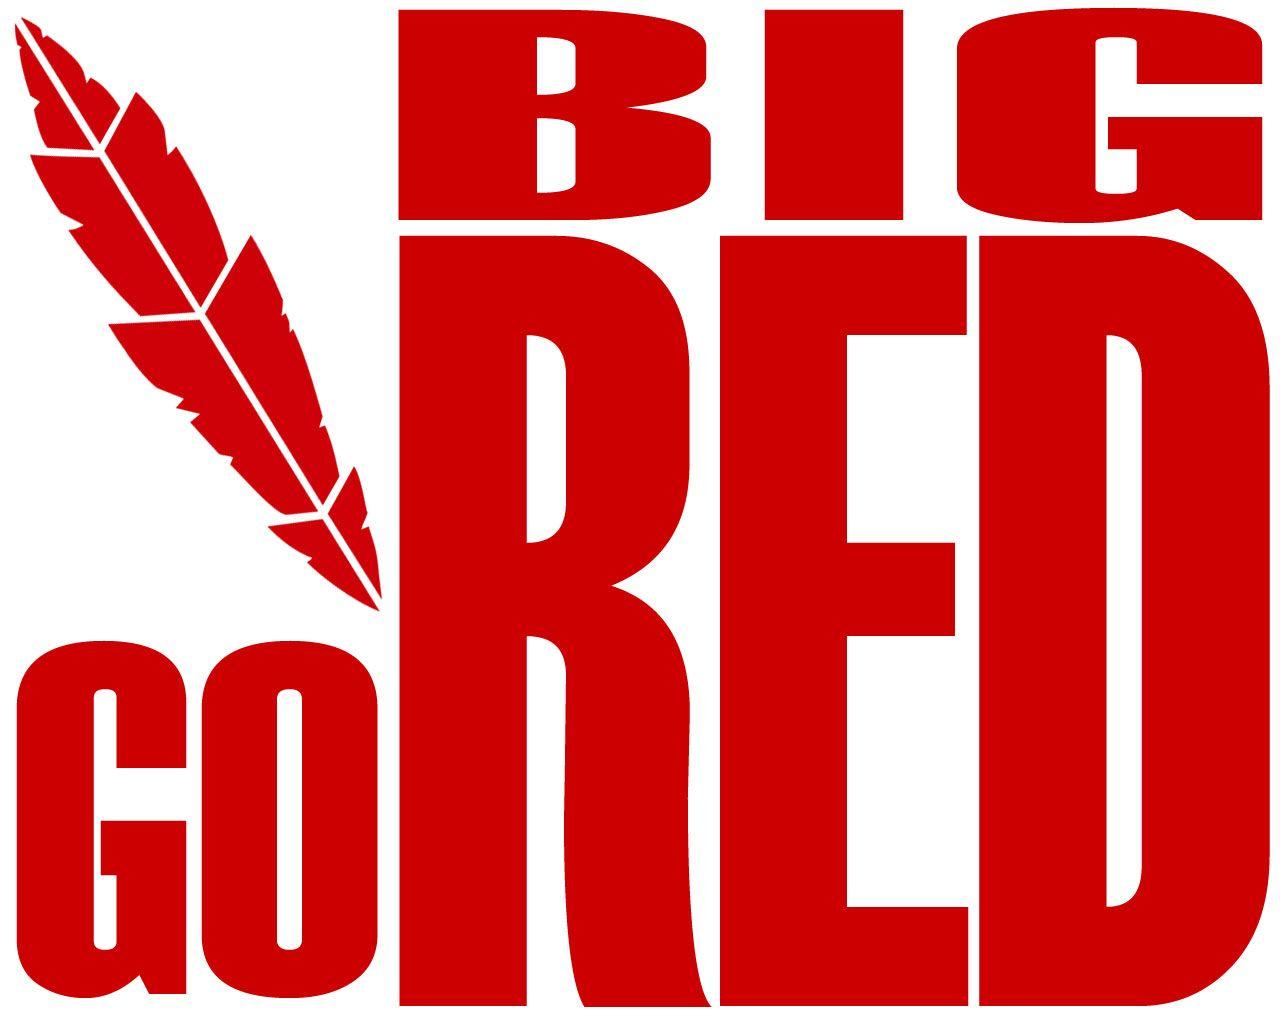 Go Big Red Logo - Media - Bellevue School District